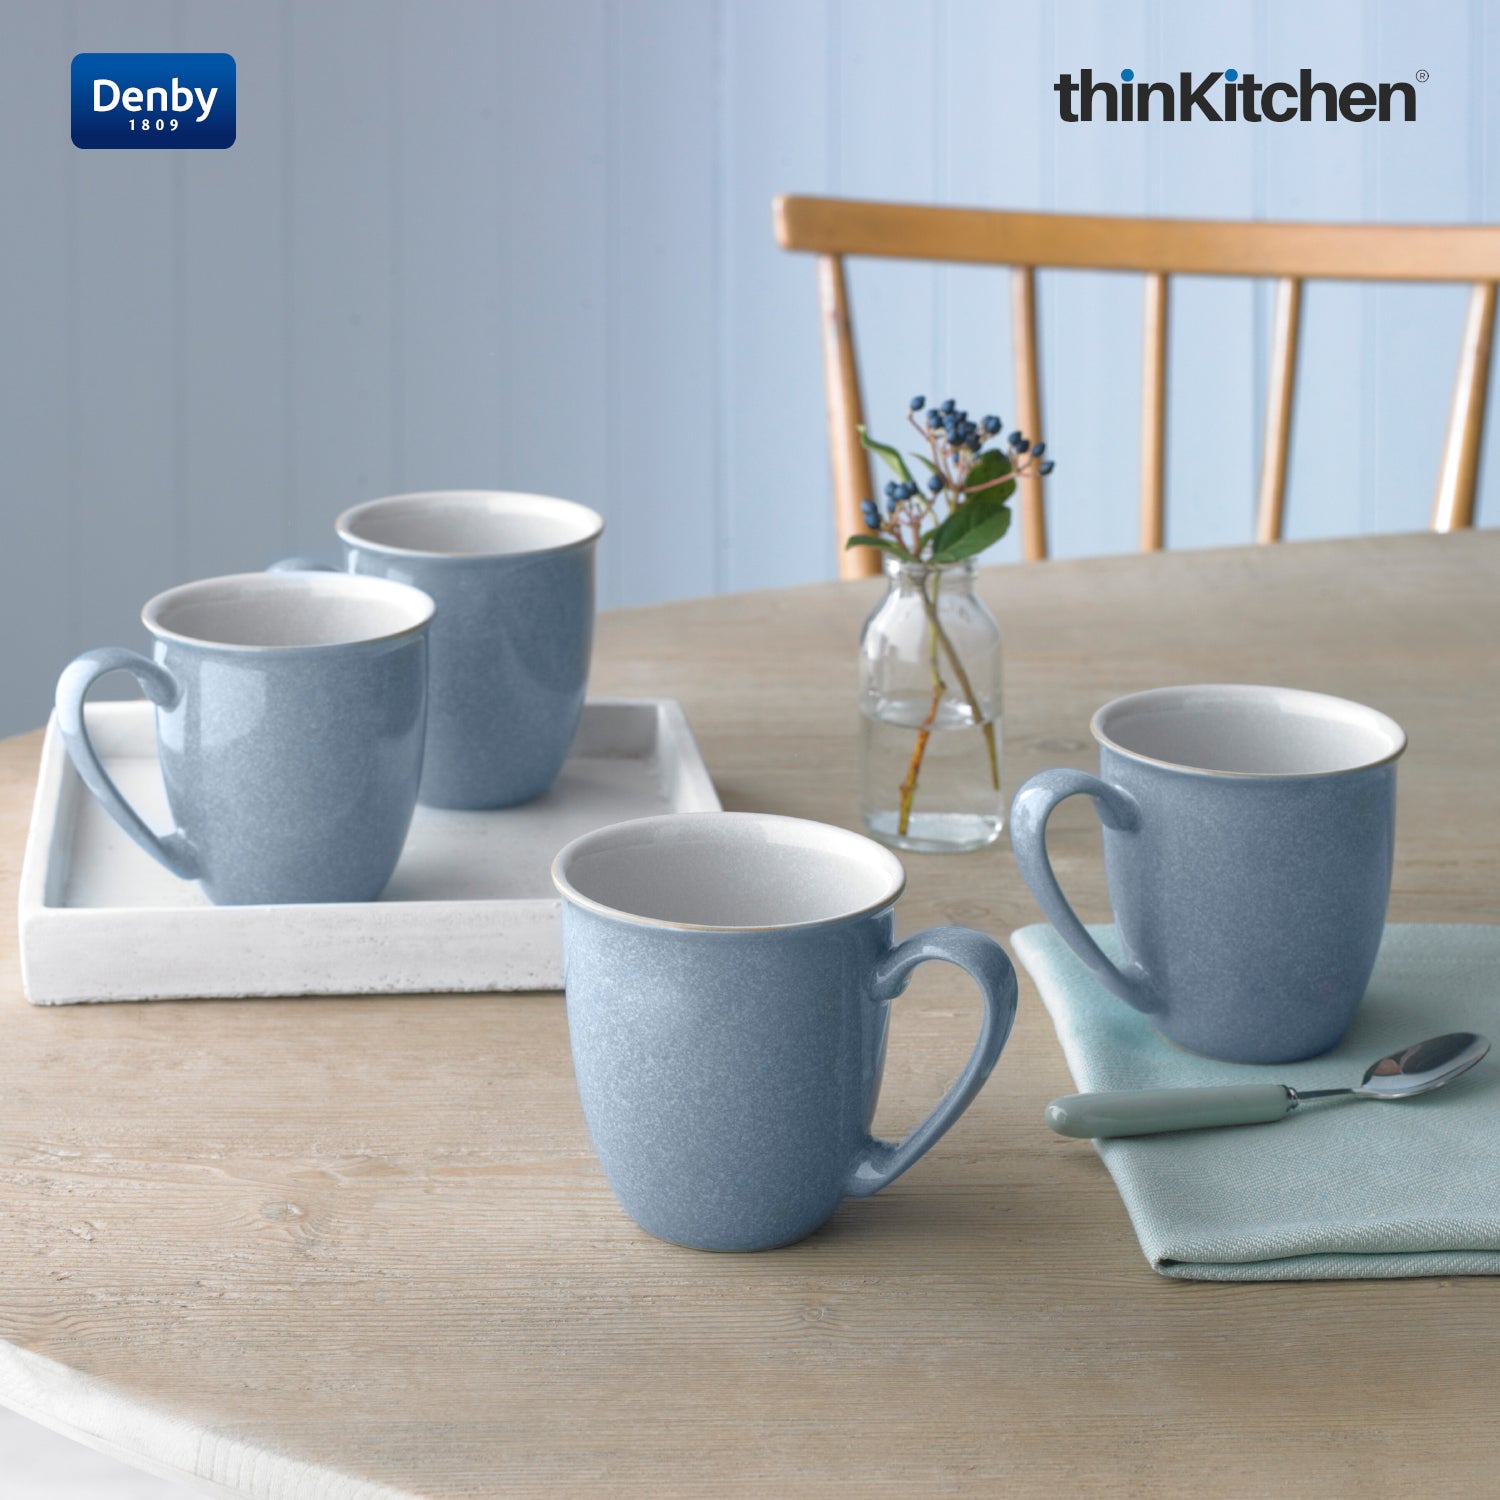 Denby Elements Blue 4 Piece Coffee Beaker/Mug Set, Buy, Online, India, thinKitchen